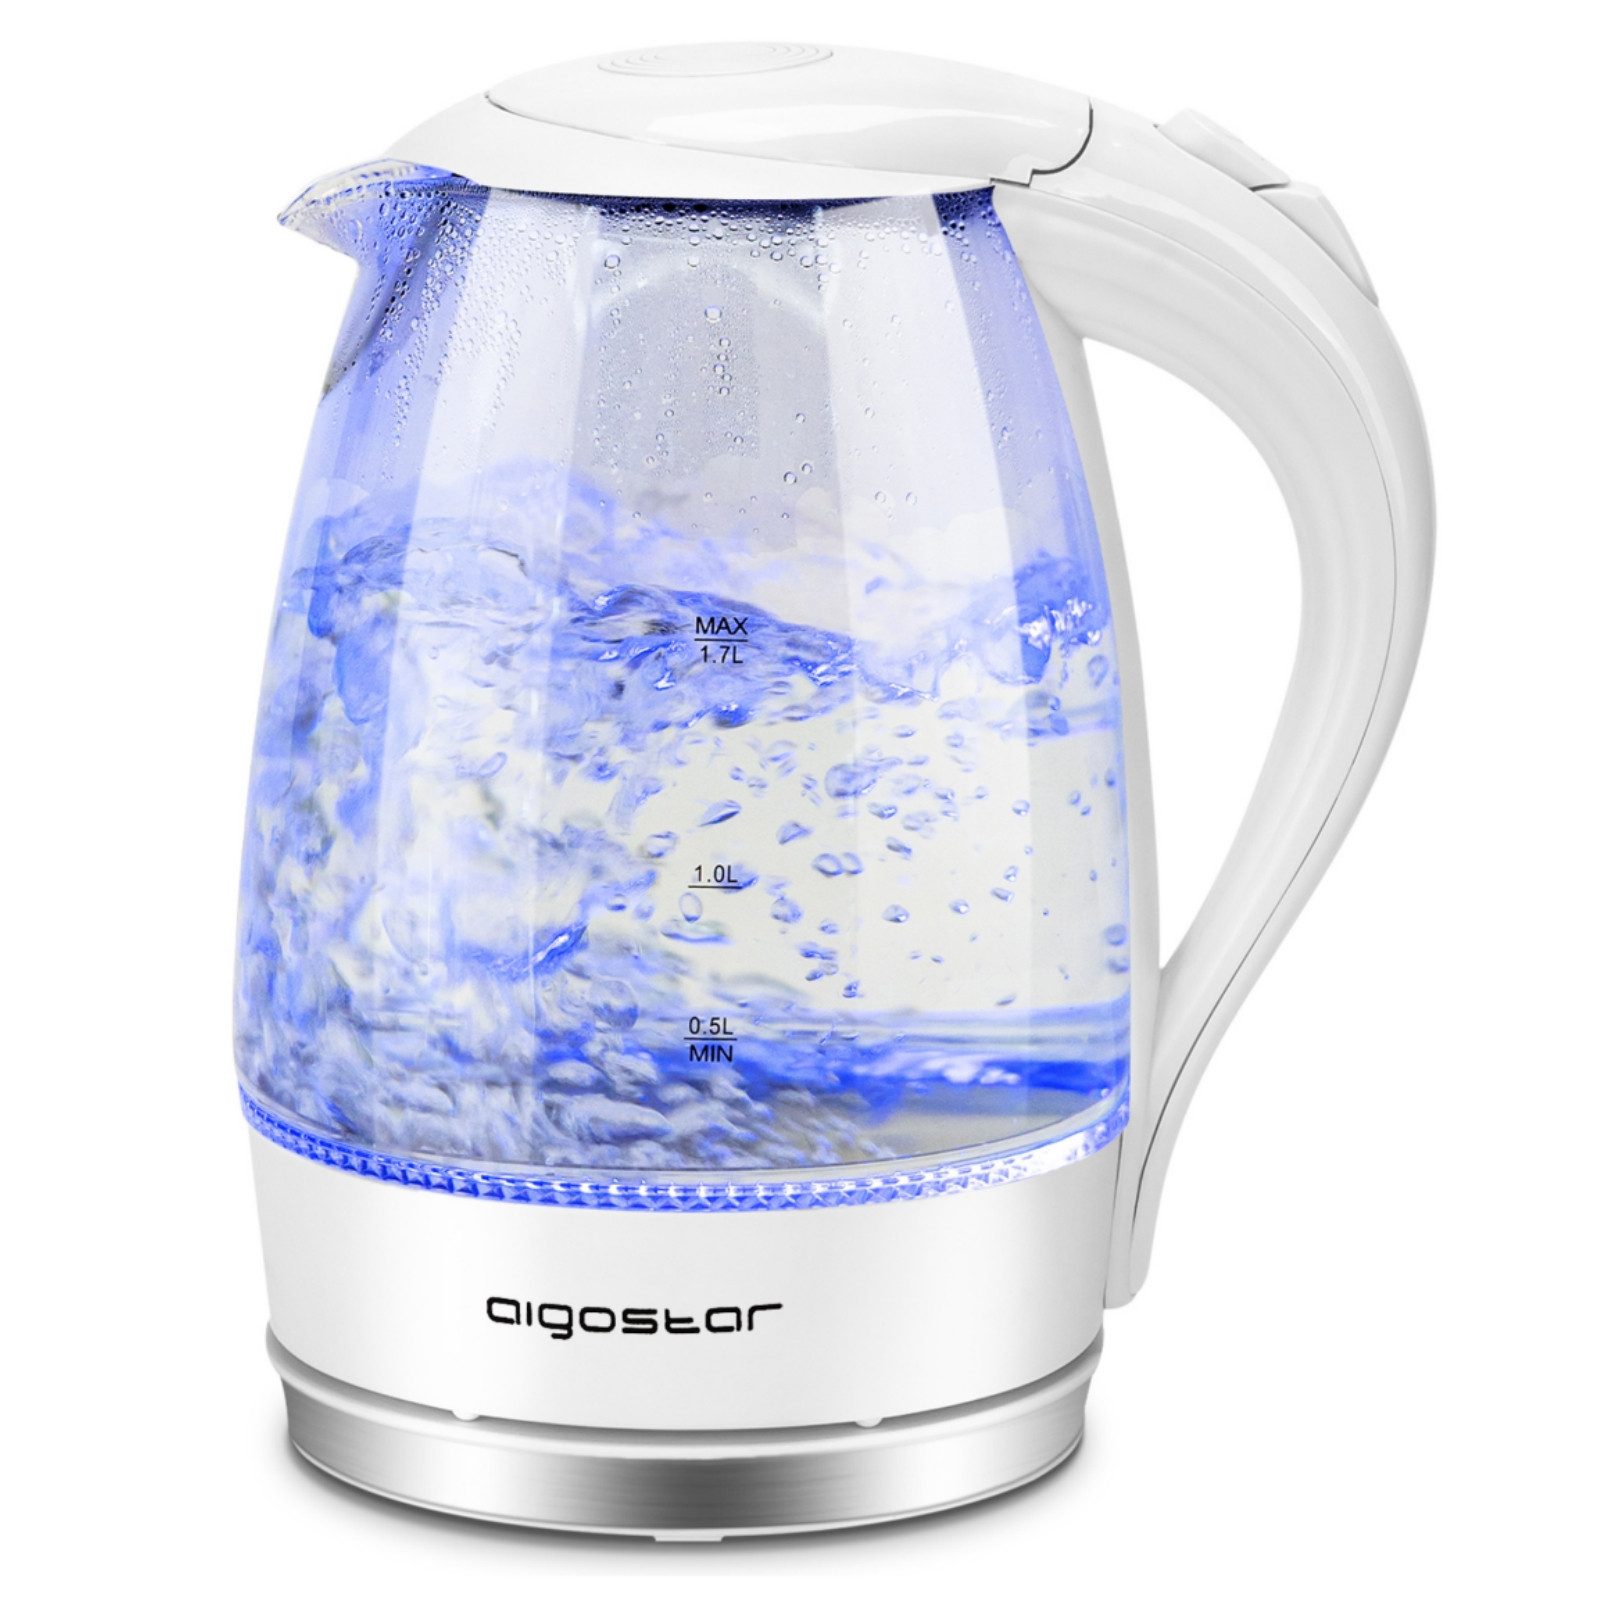 Aigostar Wasserkocher Glaswasserkocher Weiß, LED Beleuchtung, Kalkfilter, Abschaltautomatik, 1.7 l, 2200,00 W